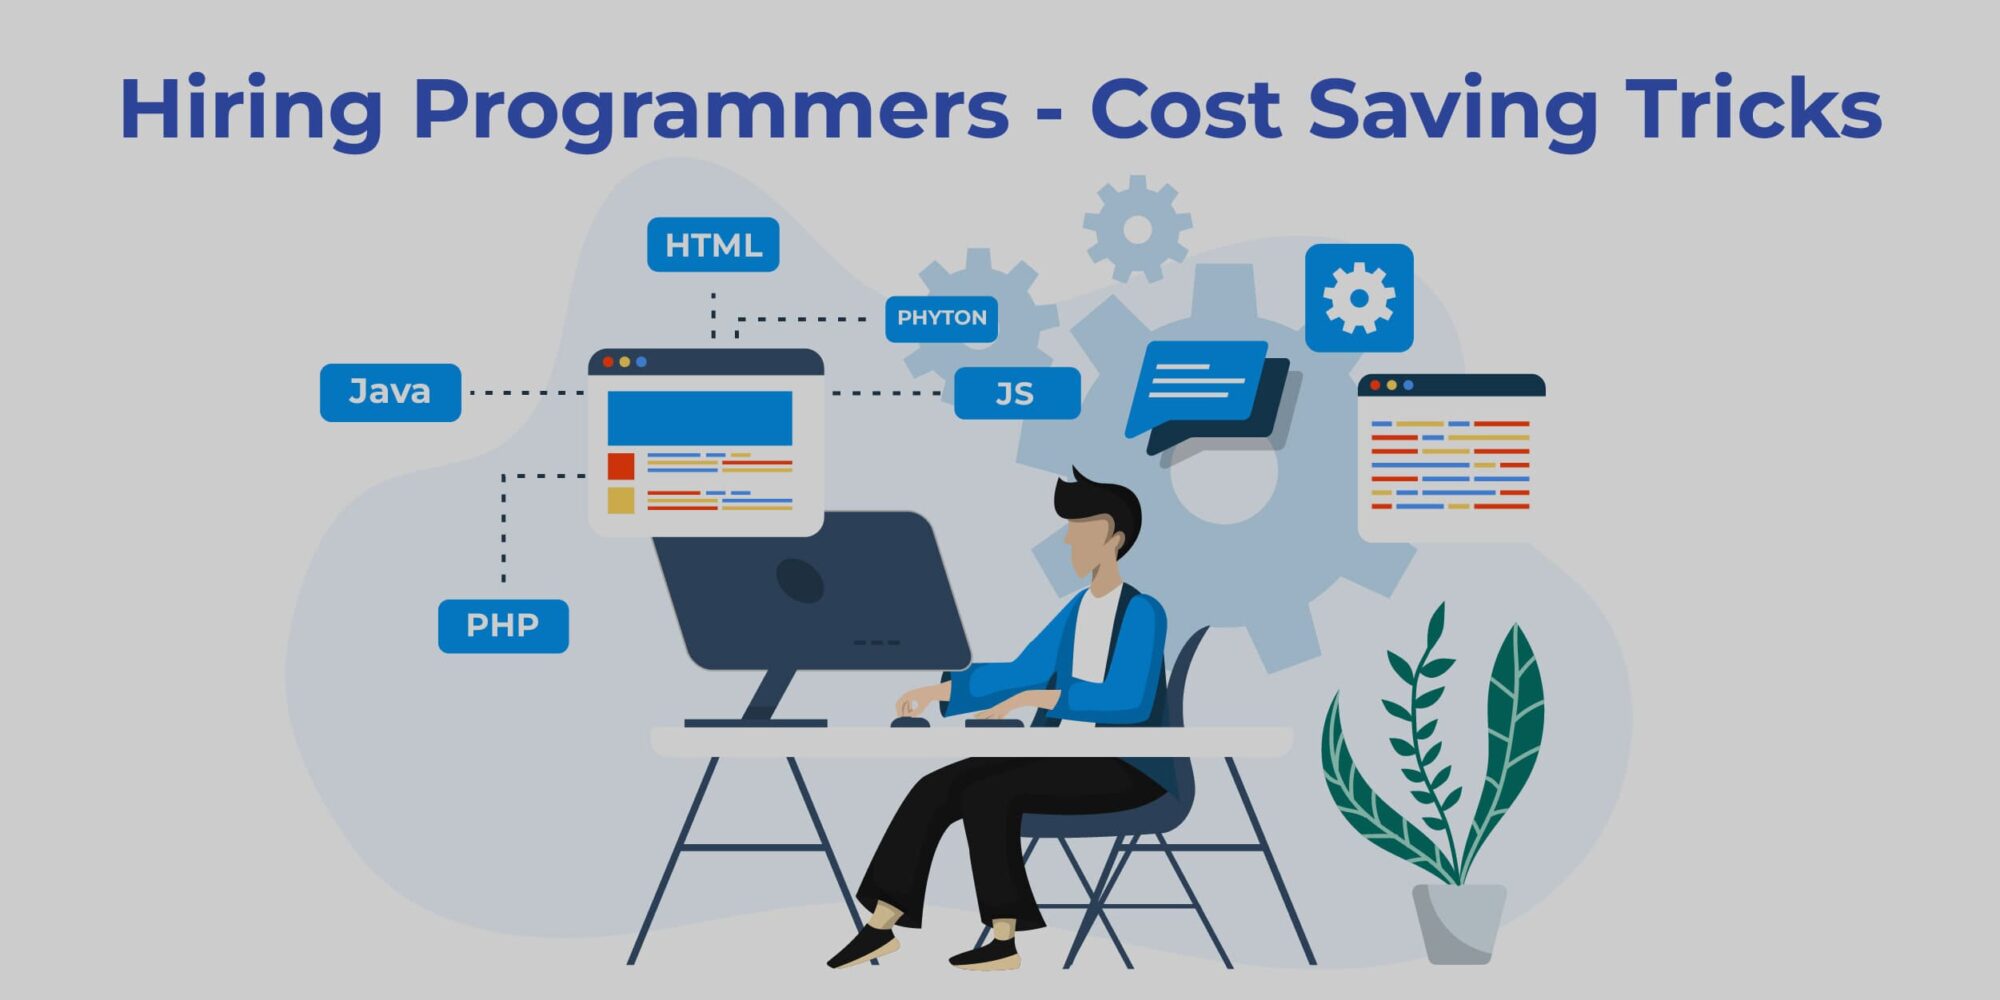 Hiring Programmers - Cost Saving Tricks